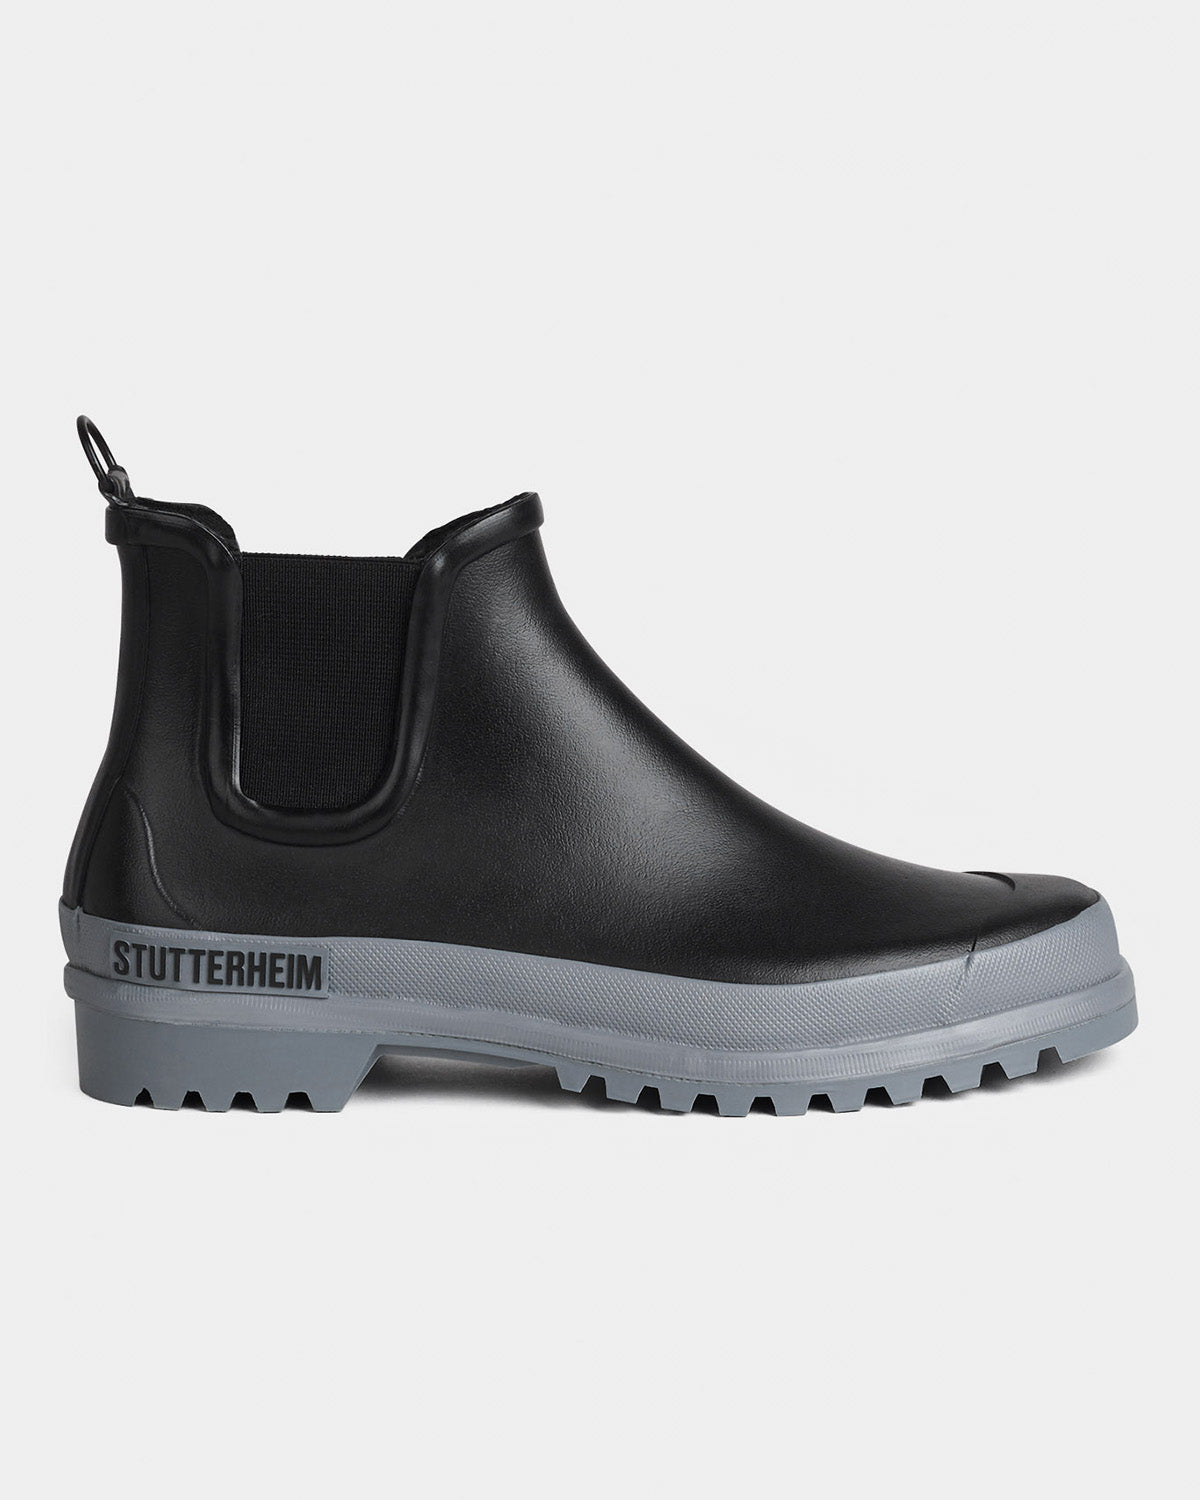 Chelsea Rainwalker Boot in color black grey by Stutterheim